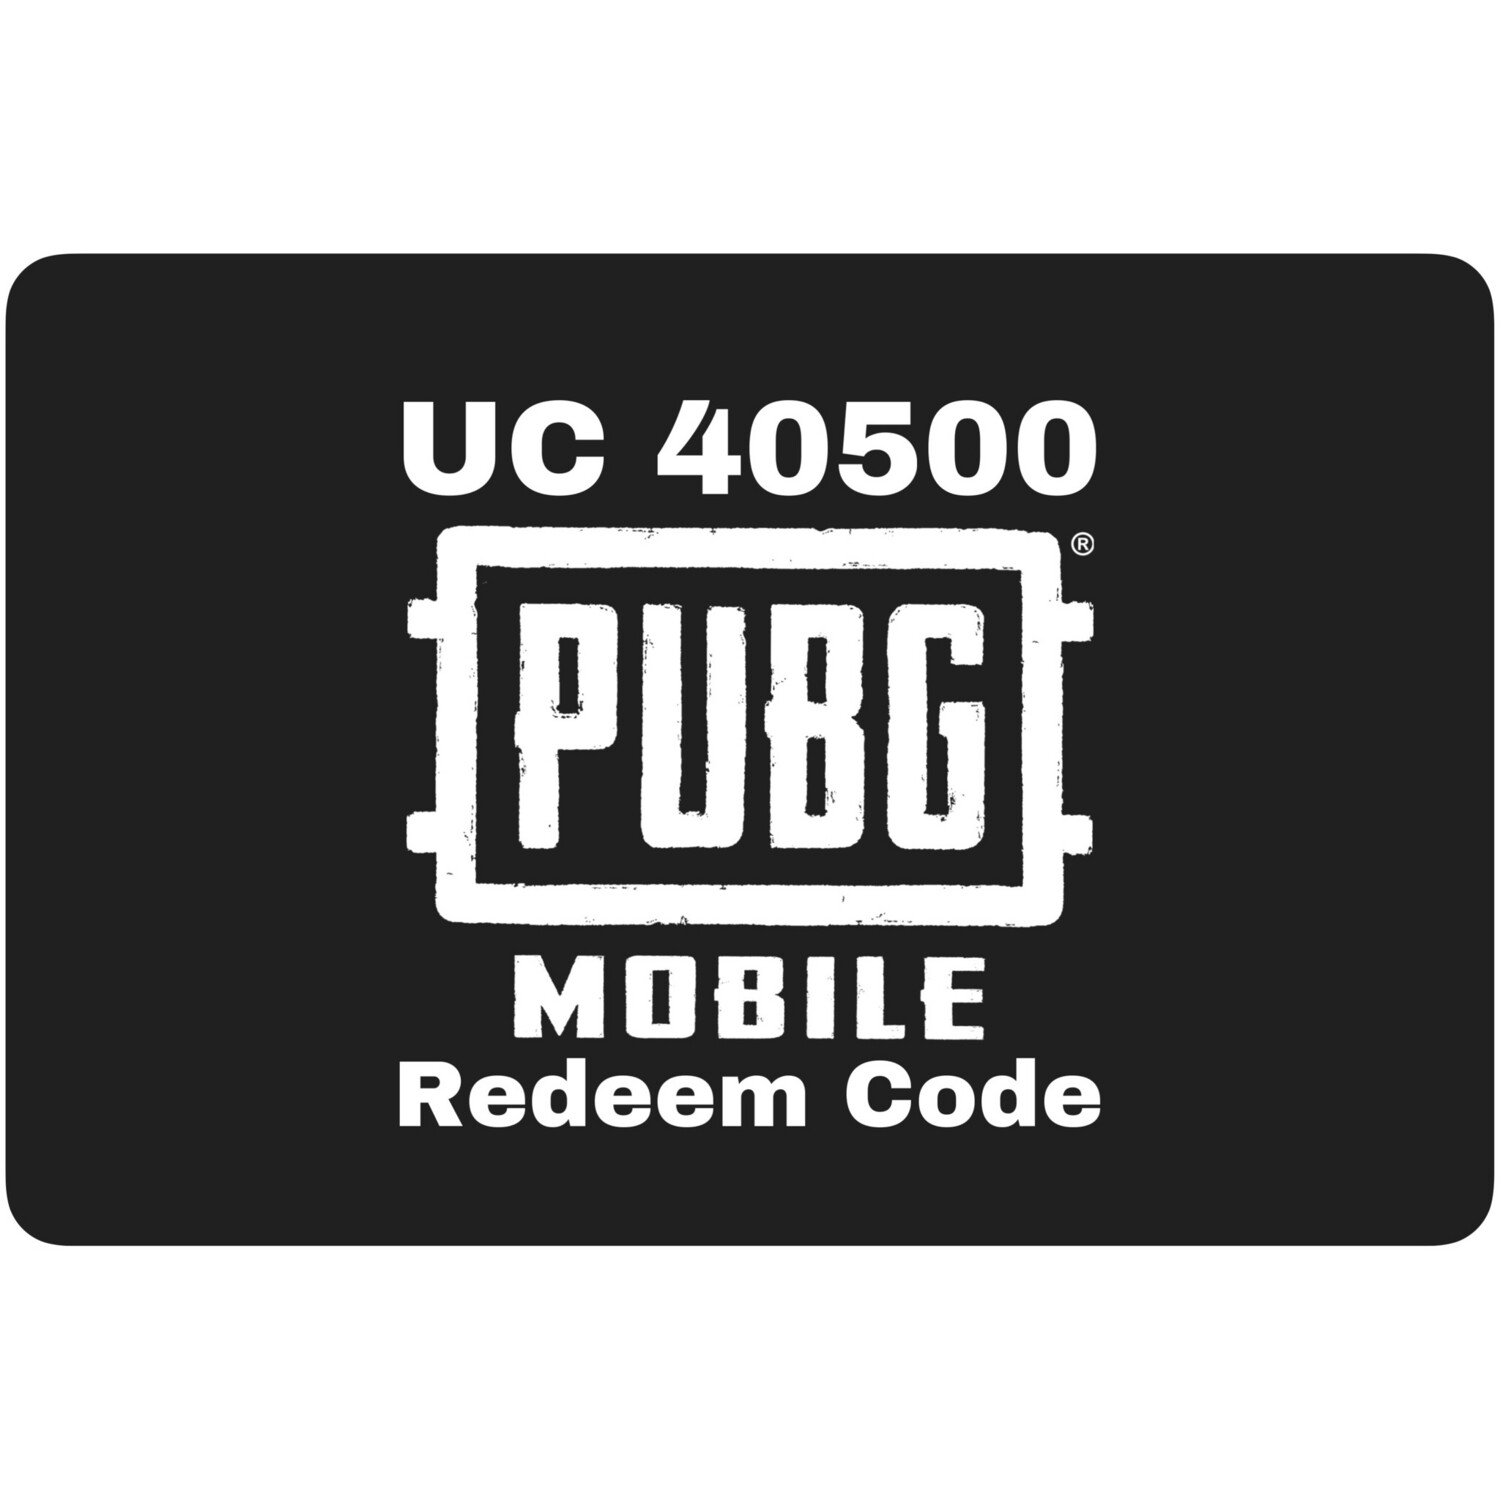 PUBG Mobile UC 40500 Redeem Code